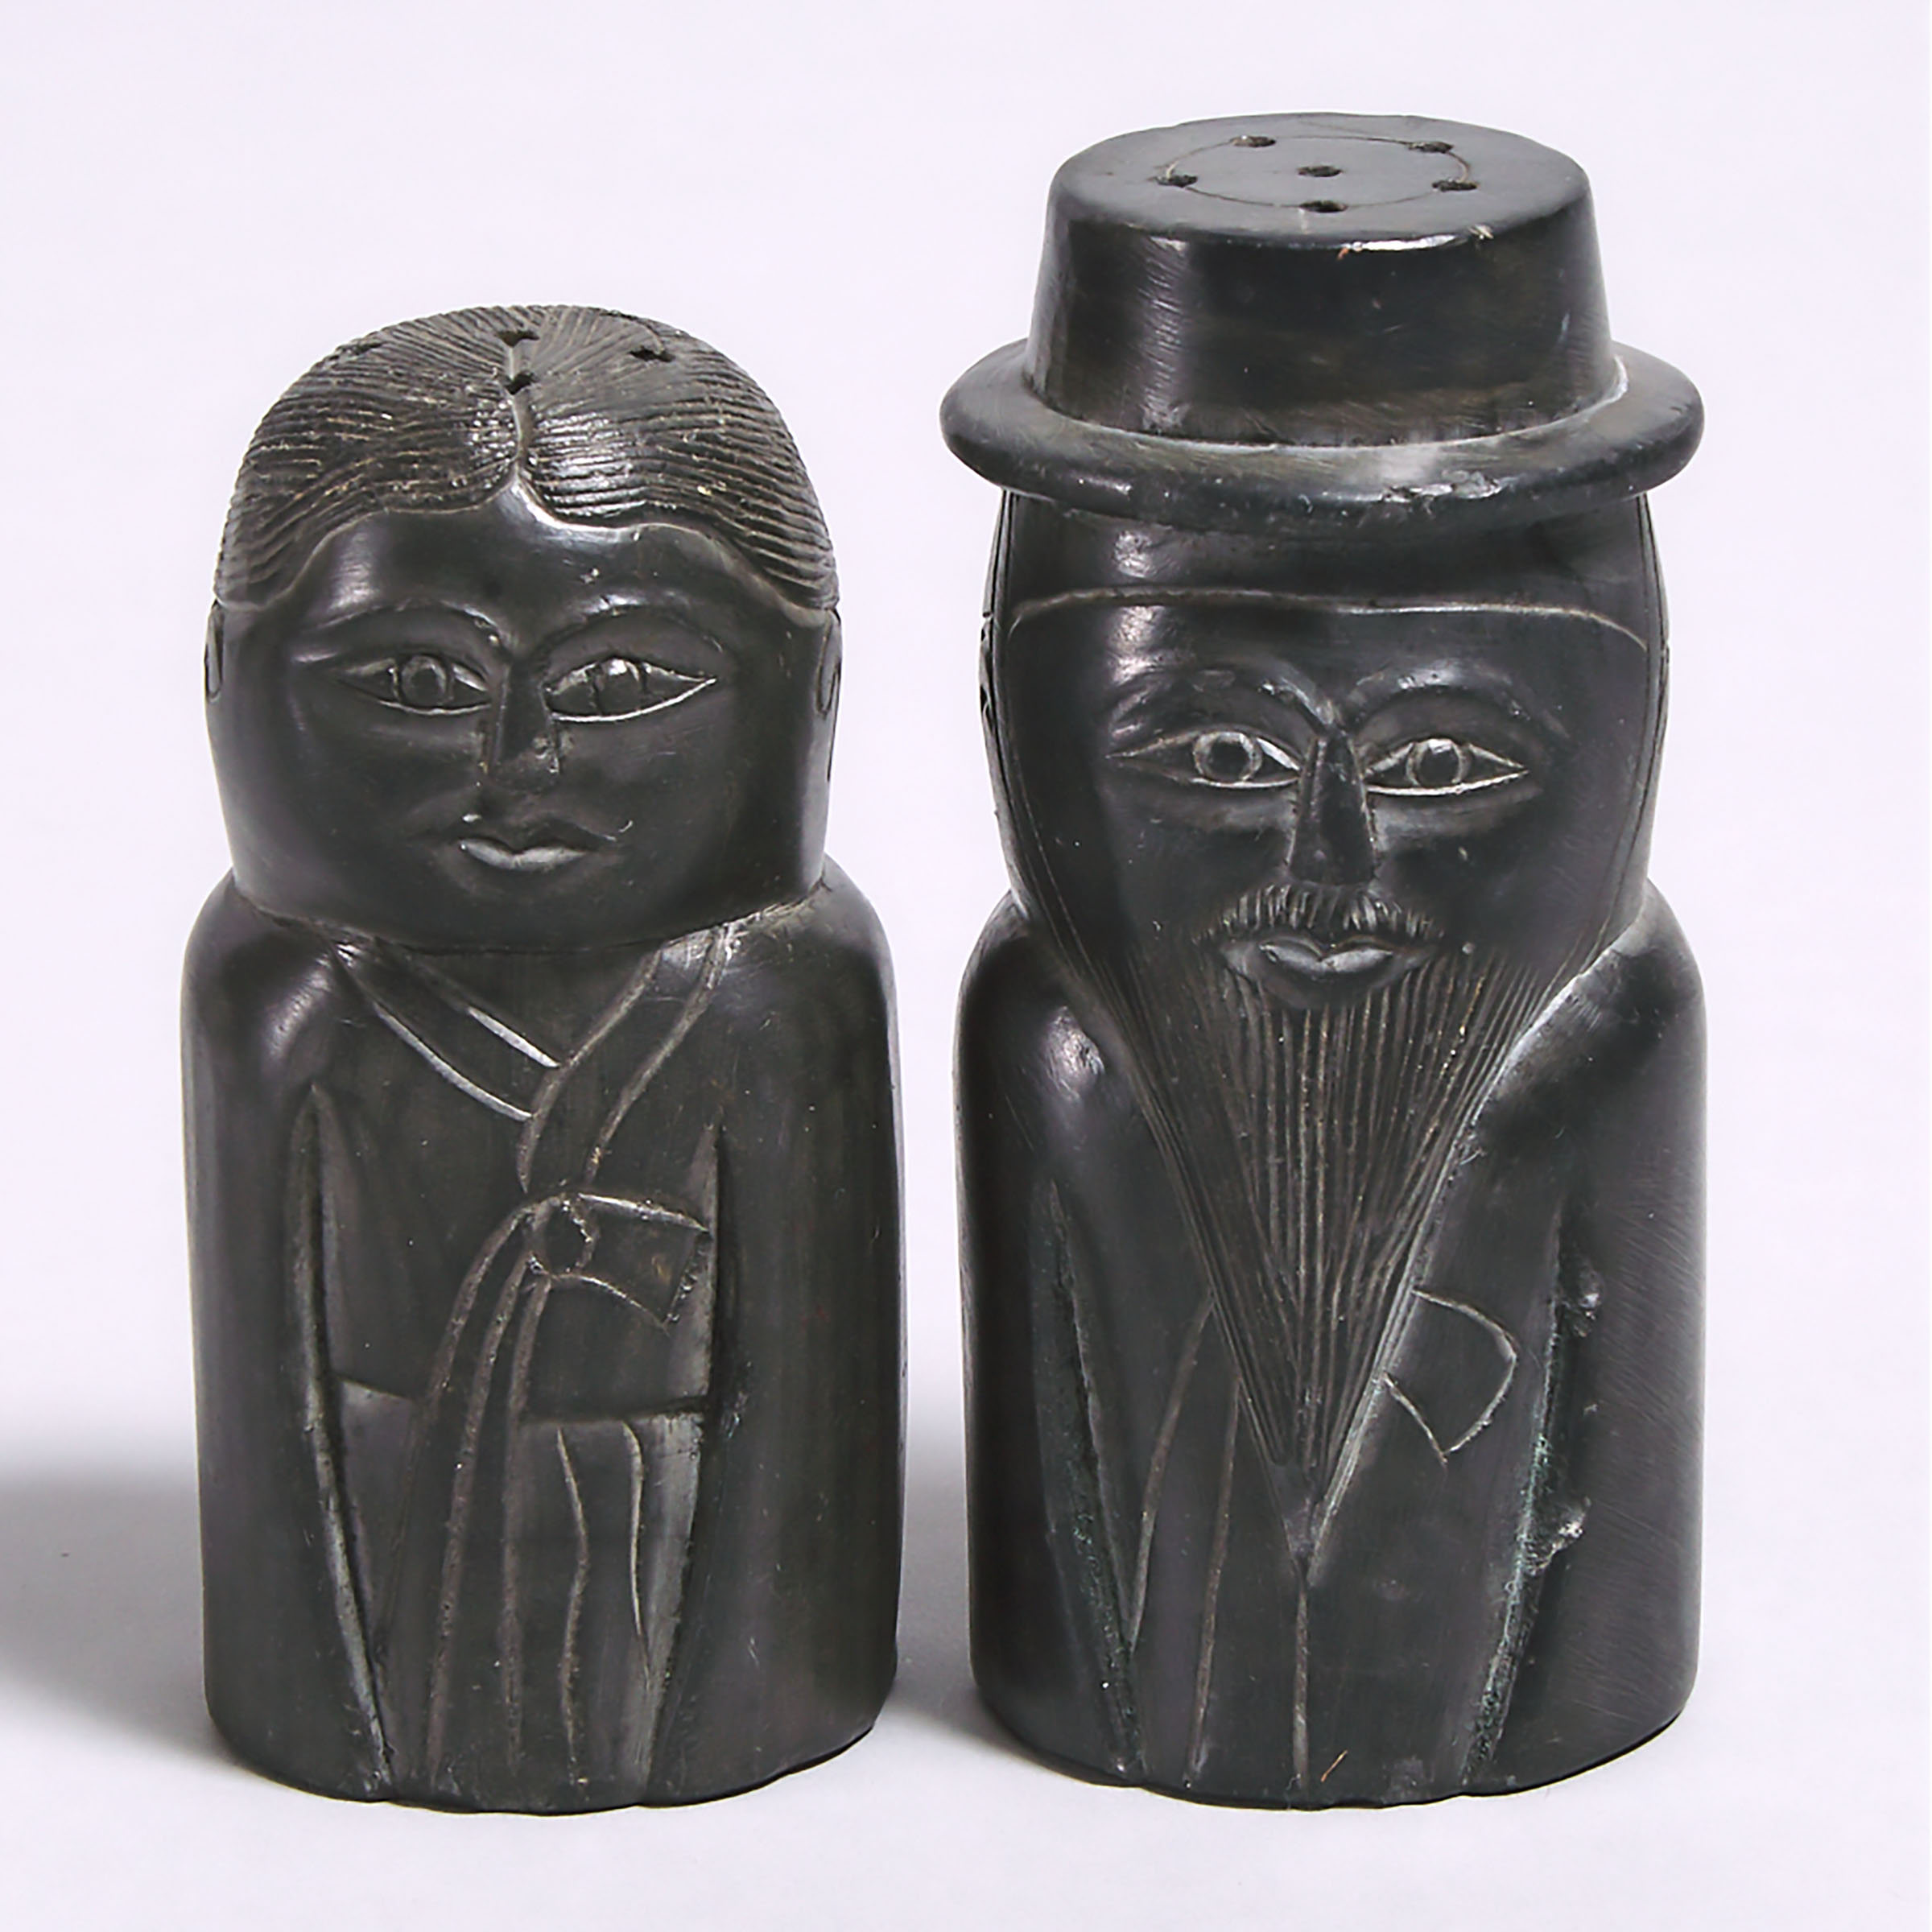 Pair of Argillite Pilgrim Figure Salt and Pepper Shakers, early-mid 20th century